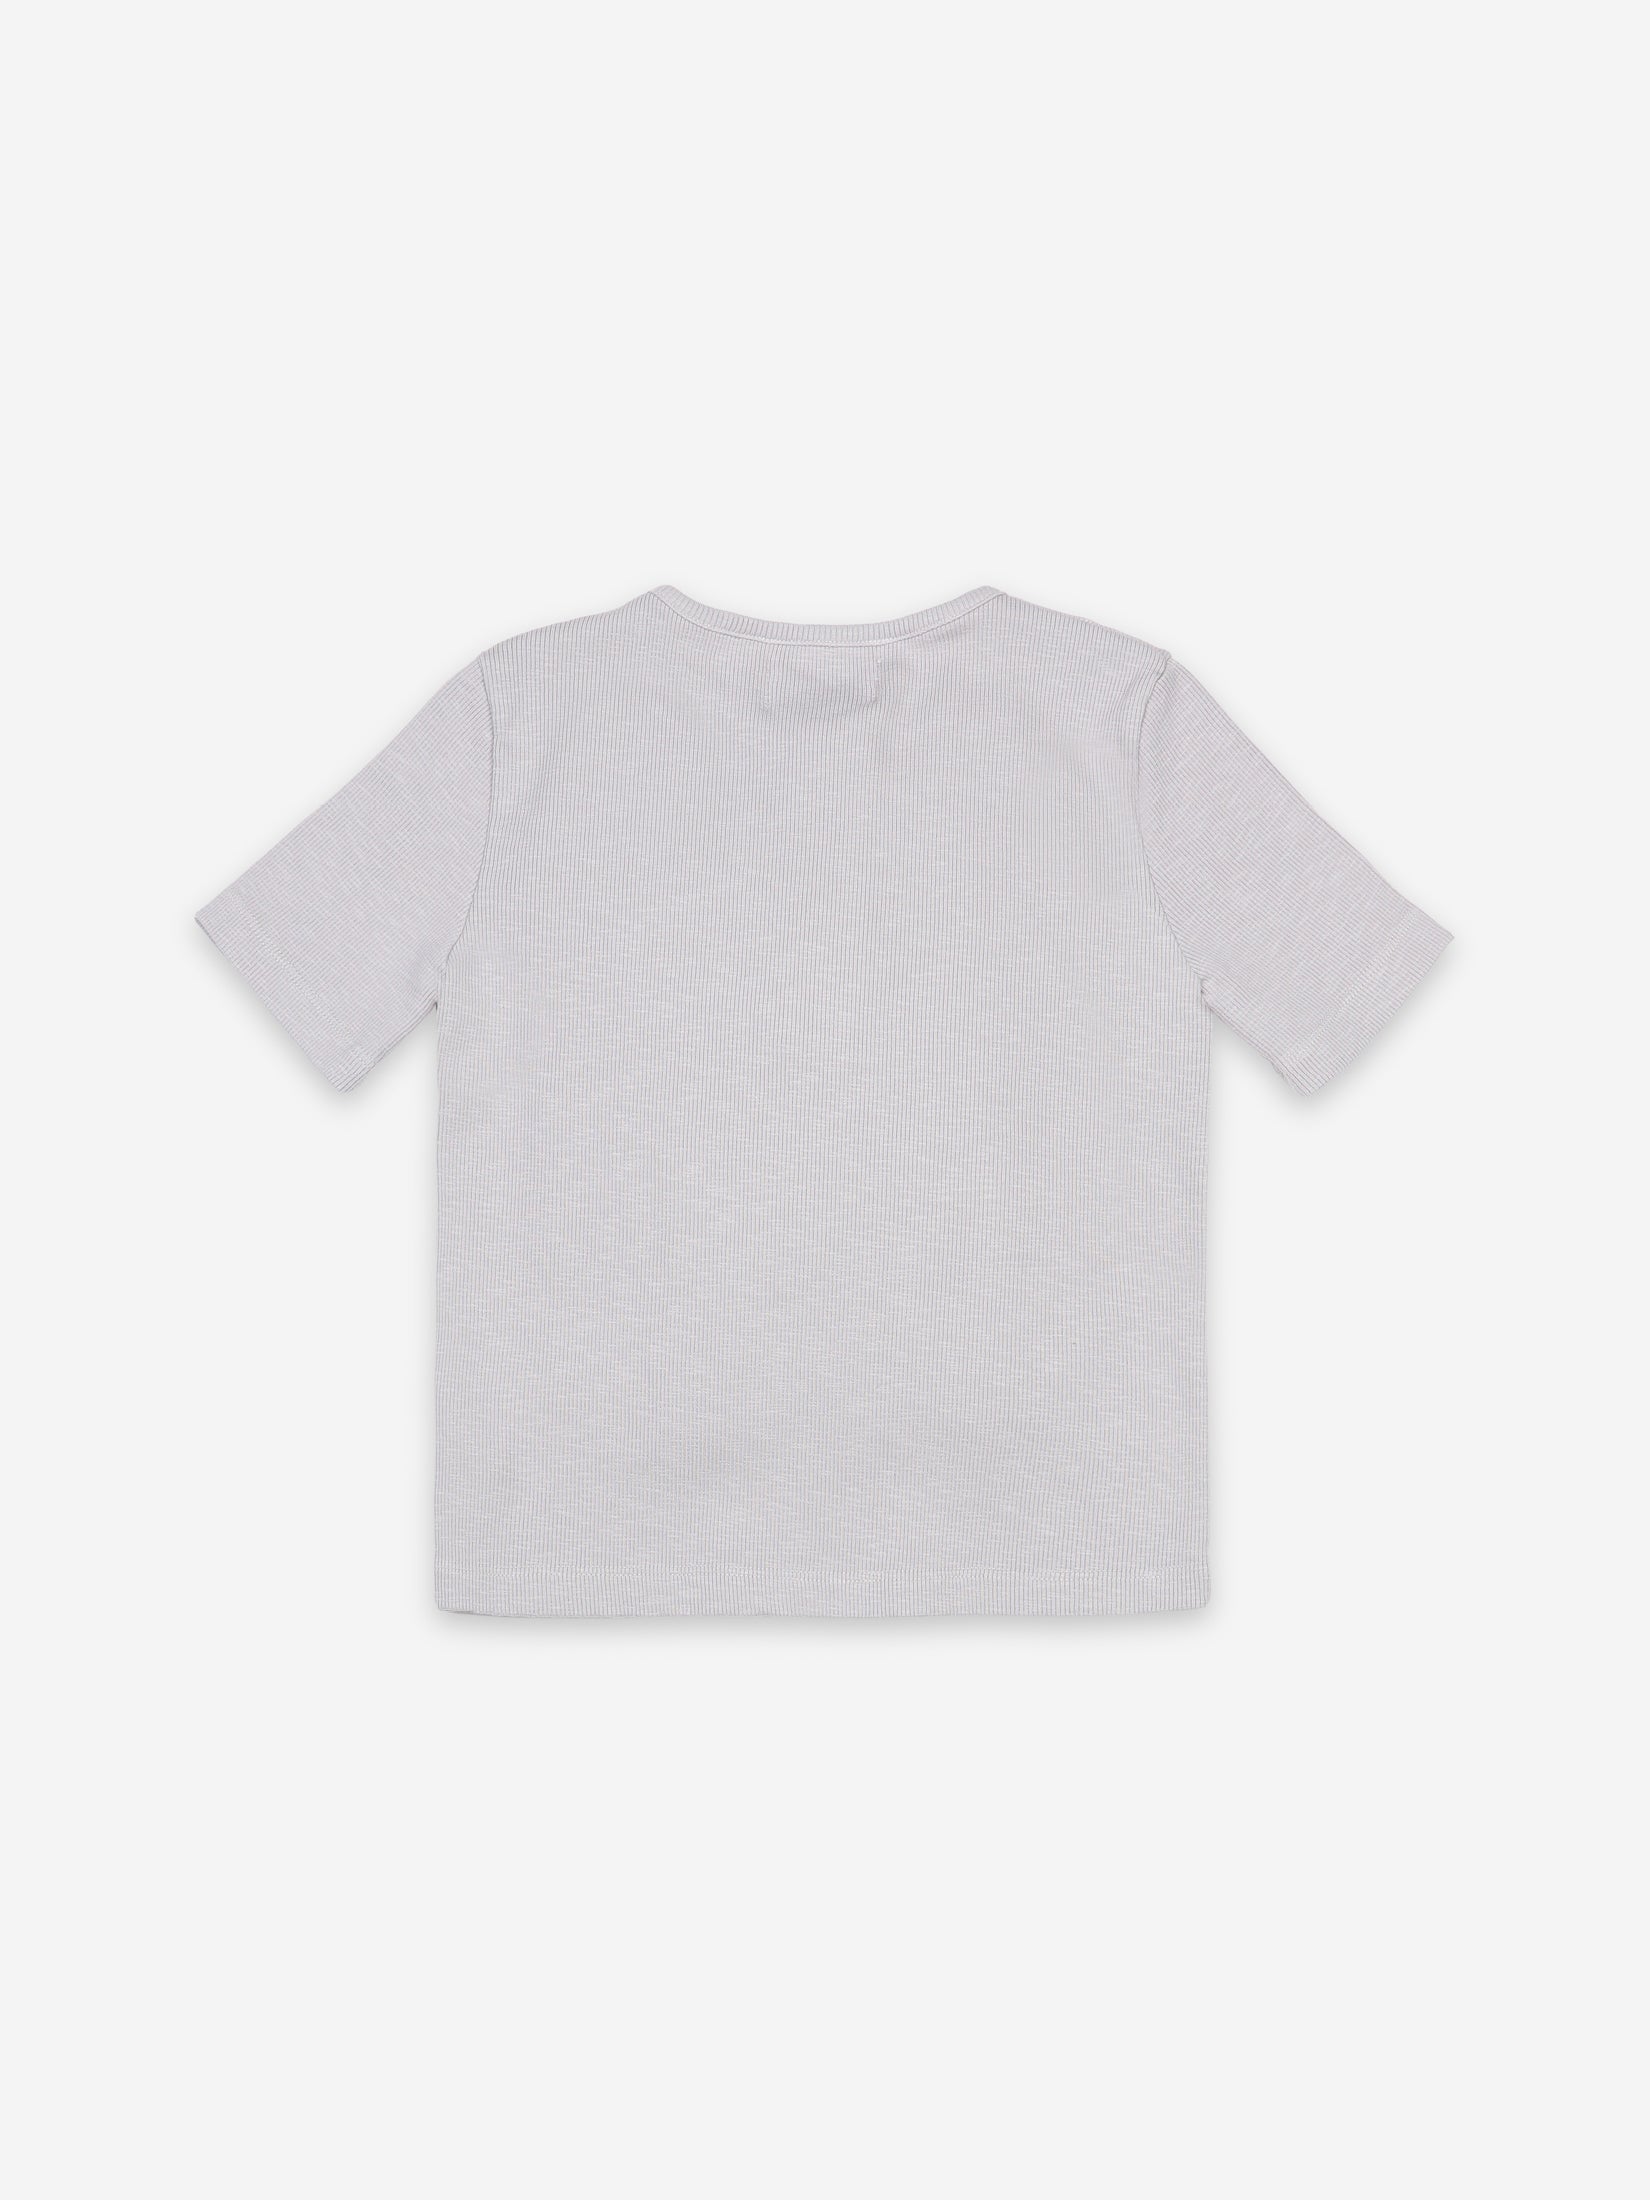 Girls Grey Stripes Cotton T-Shirt